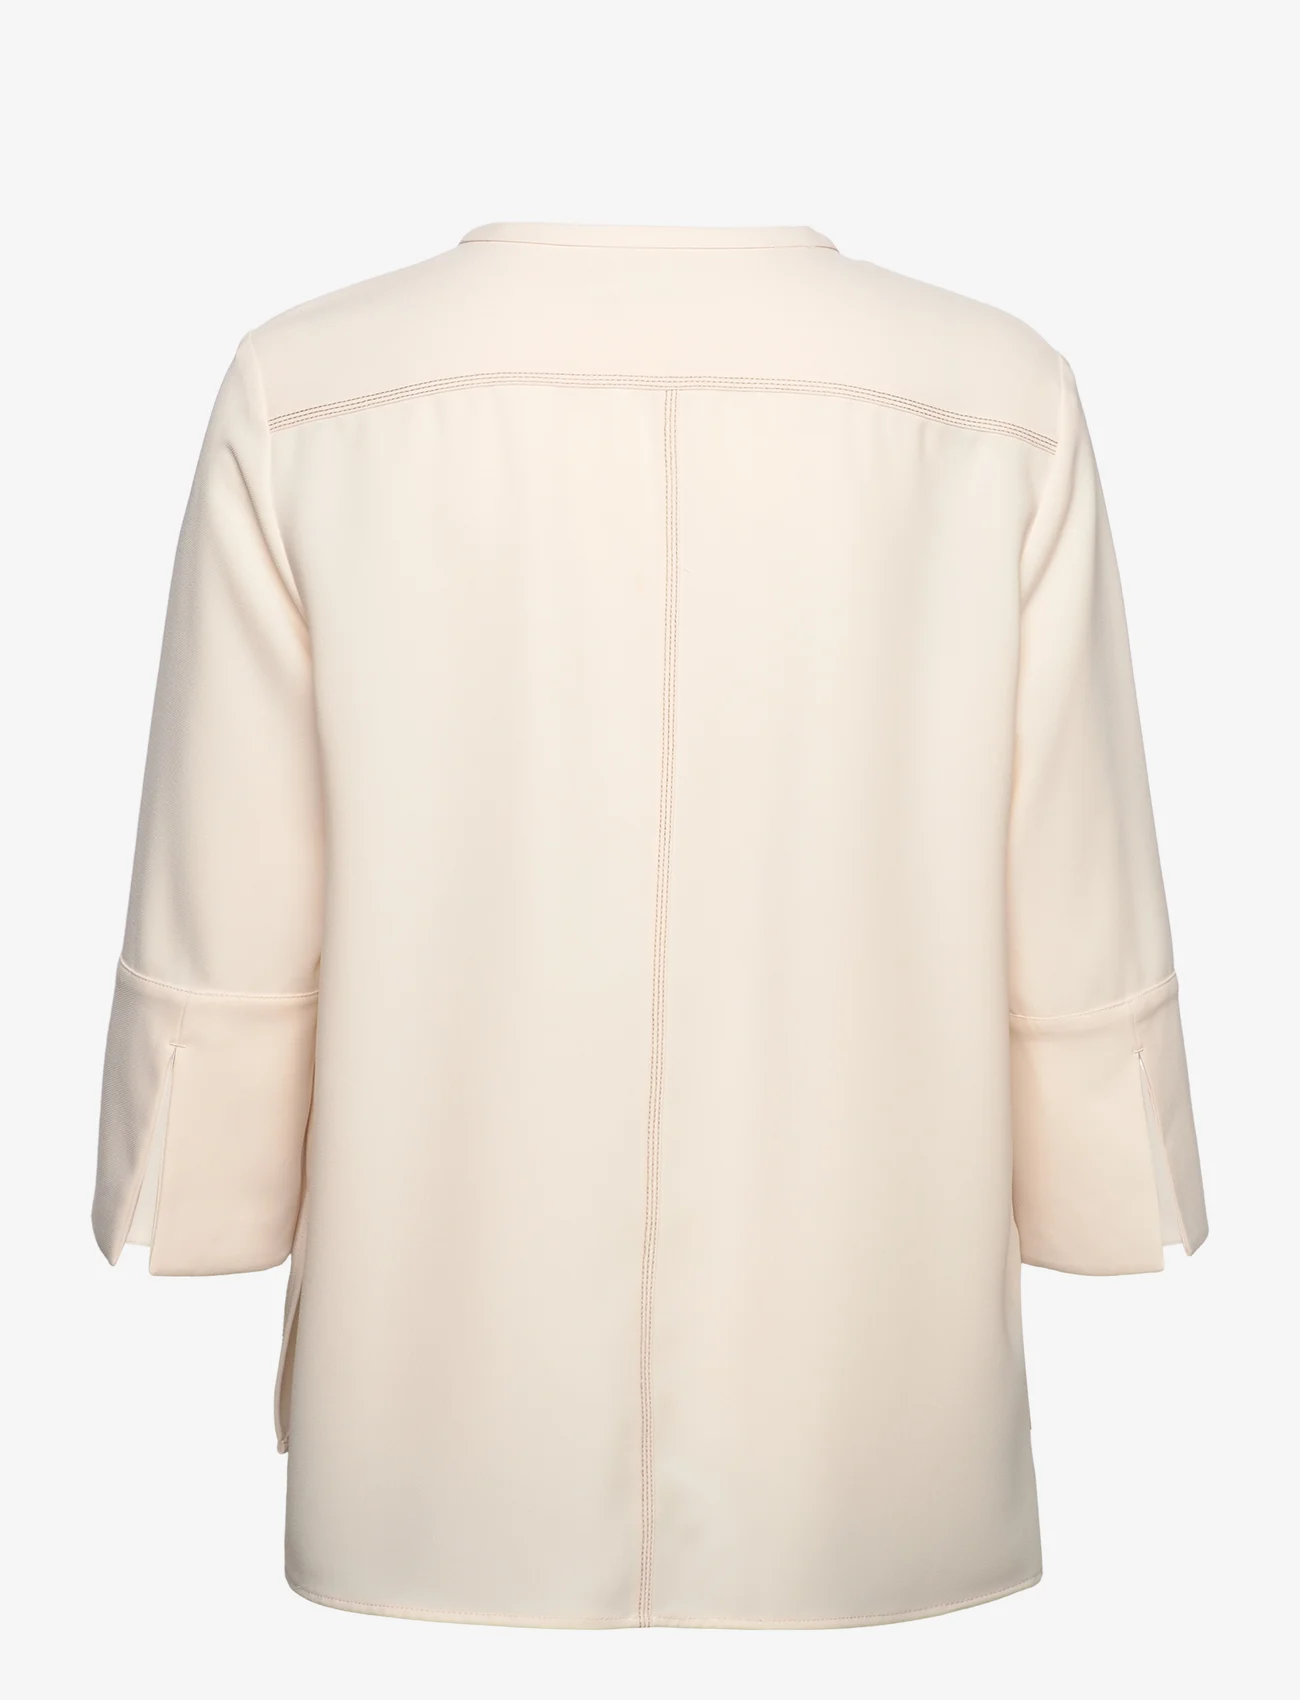 Calvin Klein - SUSTAINABLE TWILL  BLOUSE - blouses met lange mouwen - seedpearl - 1